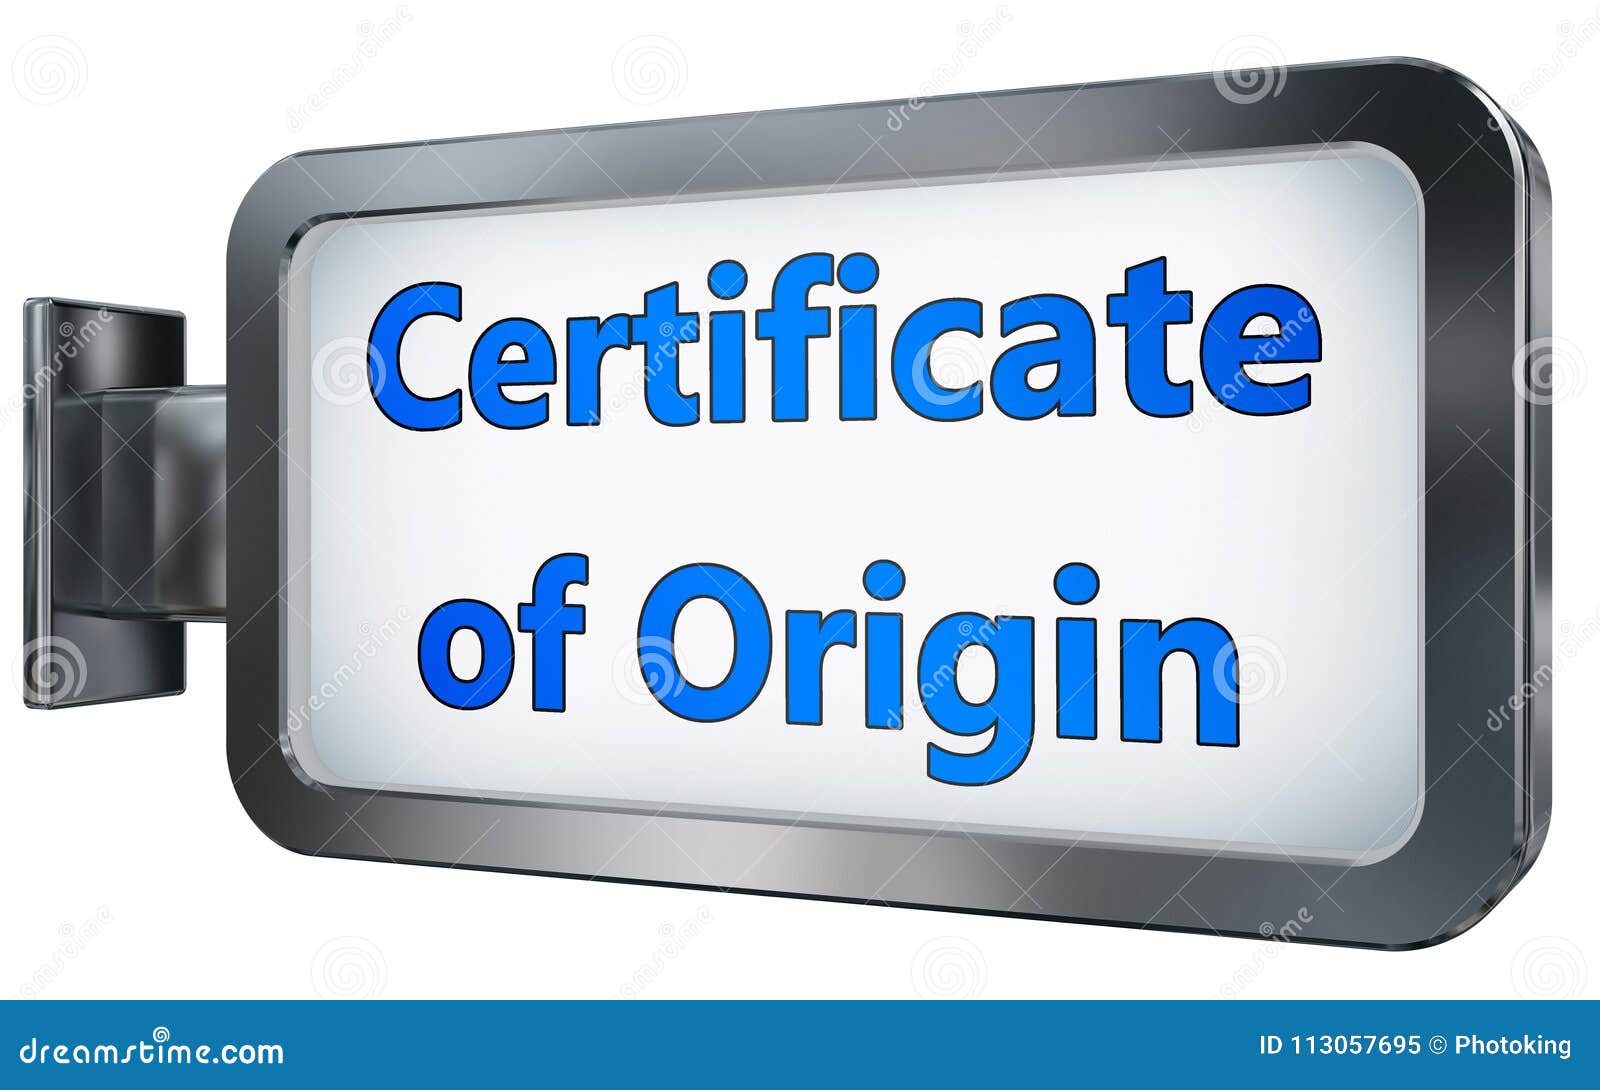 certificate of origin on billboard